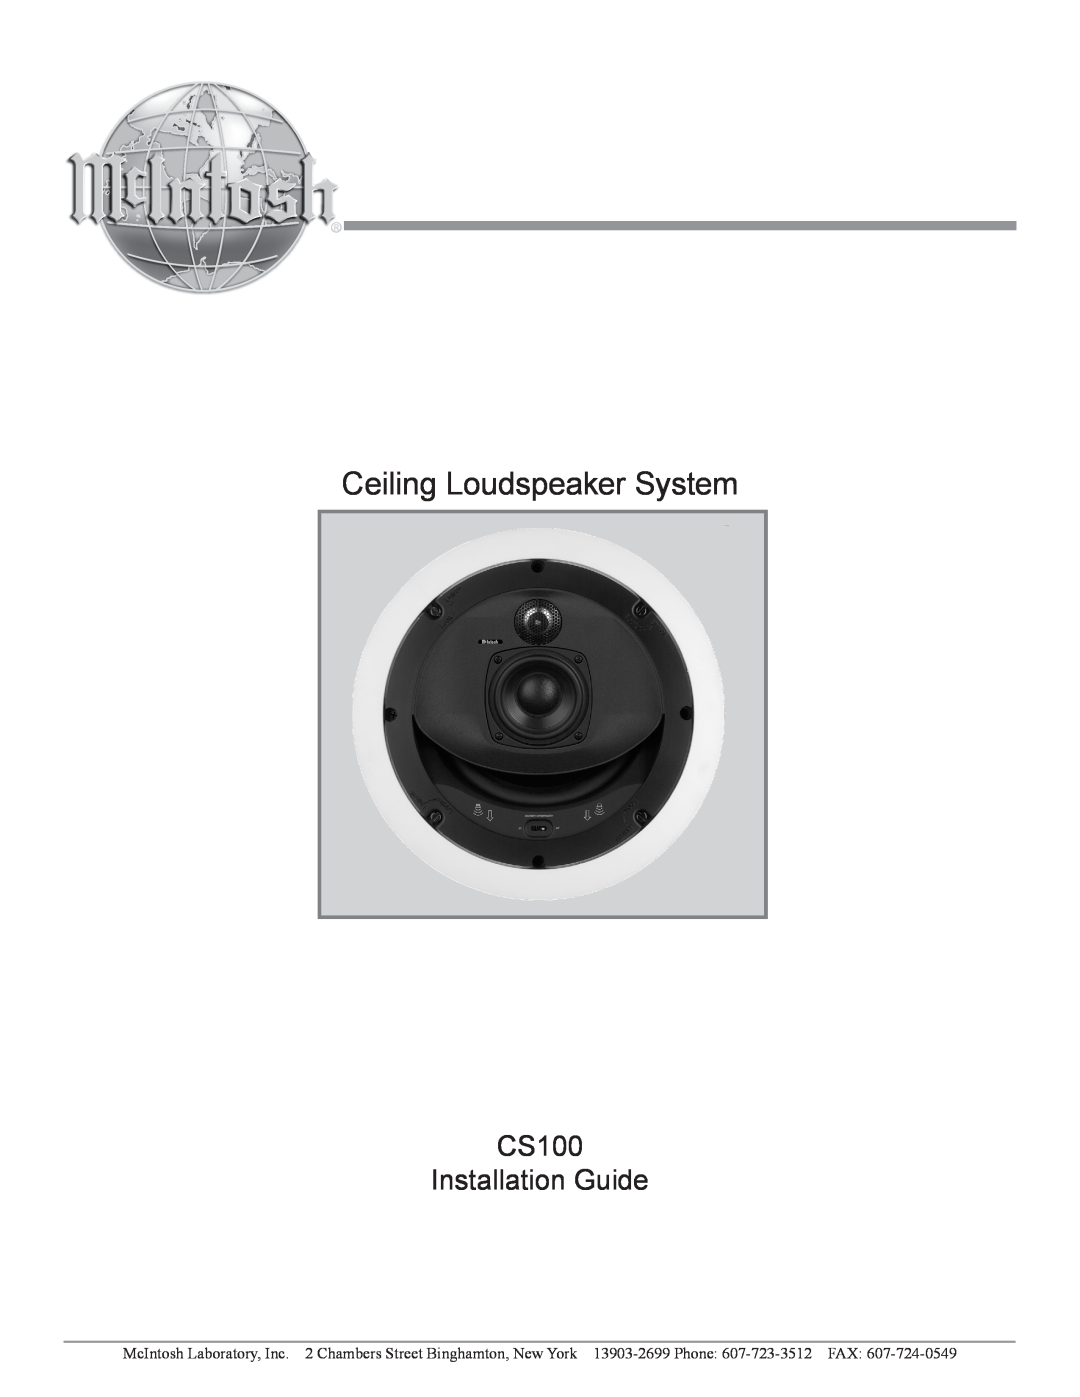 McIntosh manual Ceiling Loudspeaker System, CS100 Installation Guide 